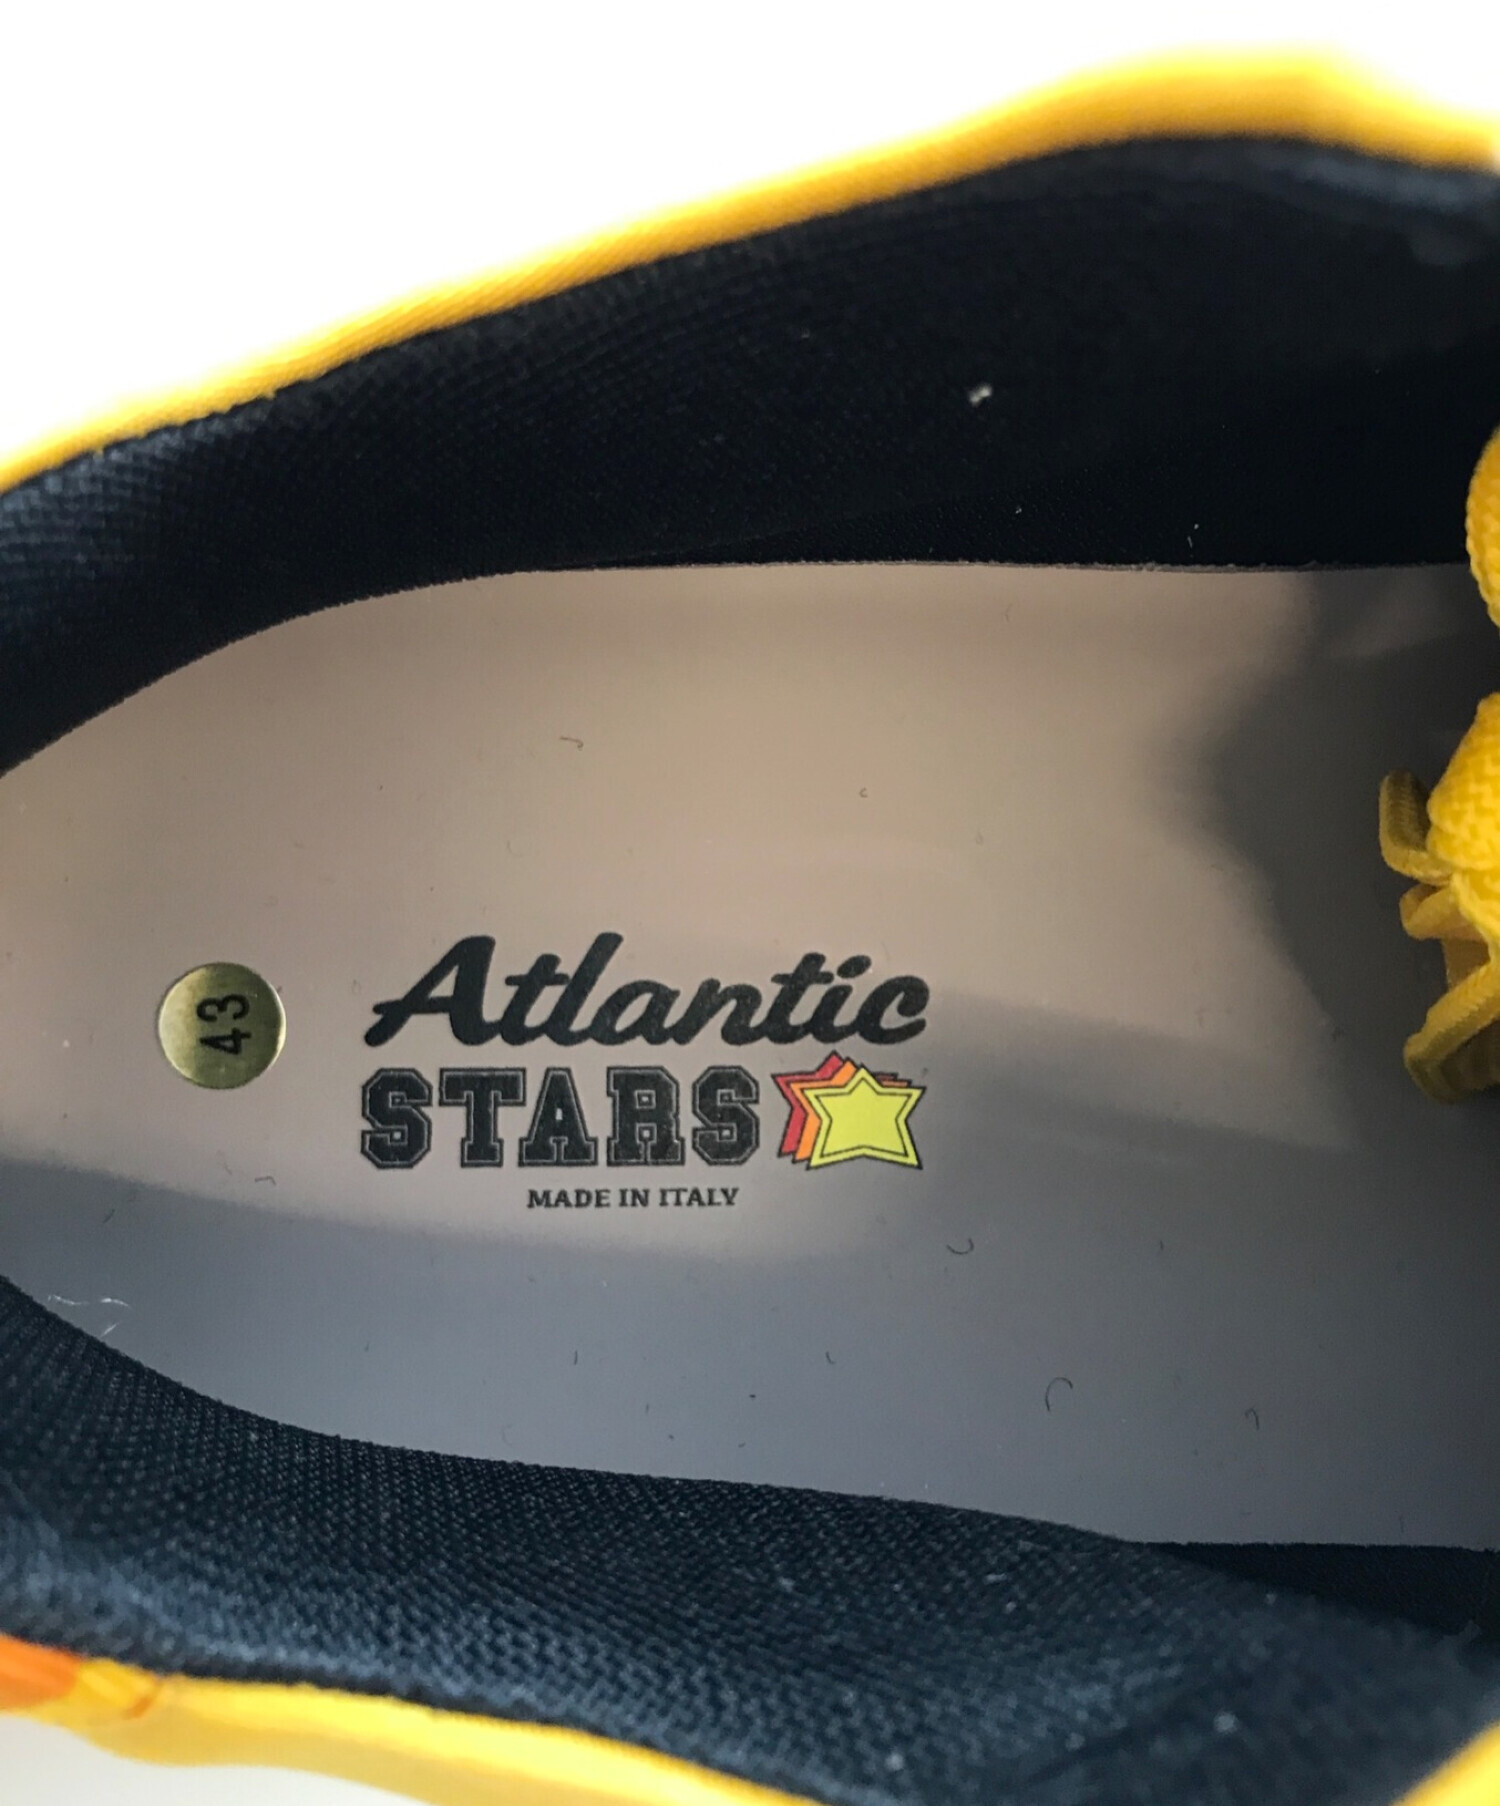 atlantic stars (アトランティックスターズ) スニーカー/ロ－カットスニーカー/スウェードスニーカー/スエードスニーカー/レースアップ  シューズ グレー×イエロー サイズ:43